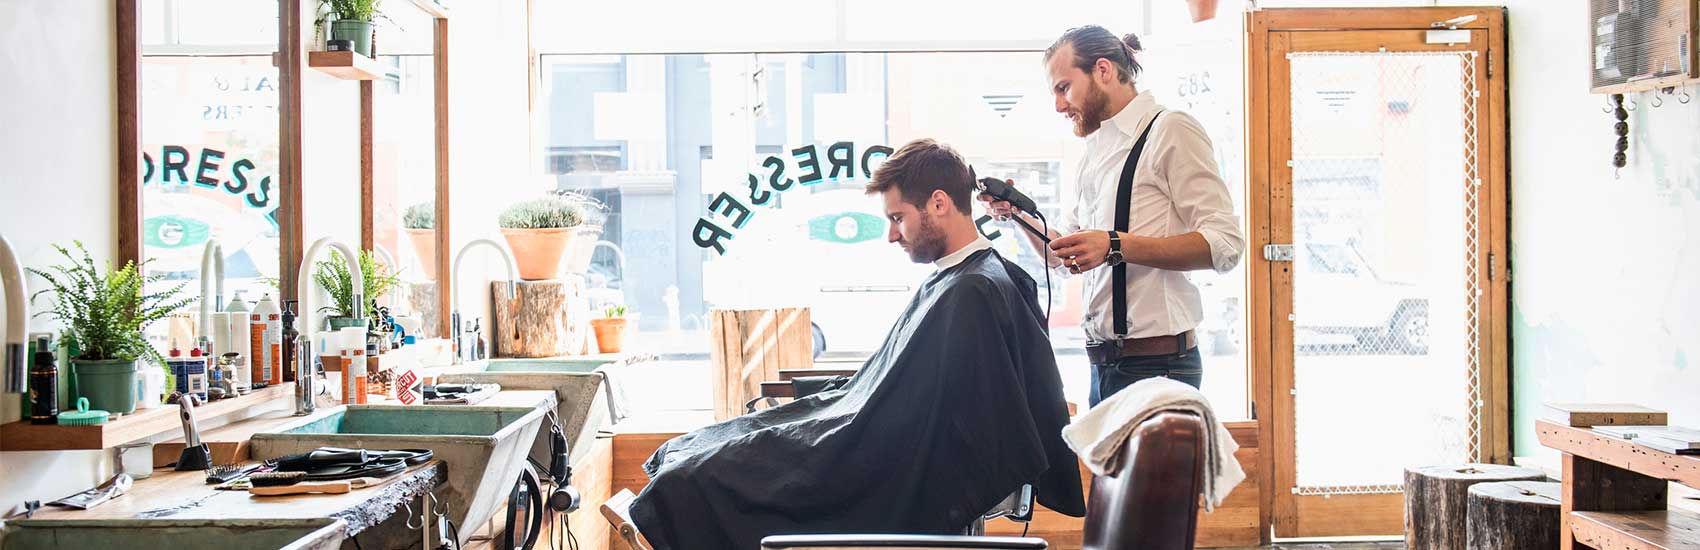 A National Full-service Barbershop